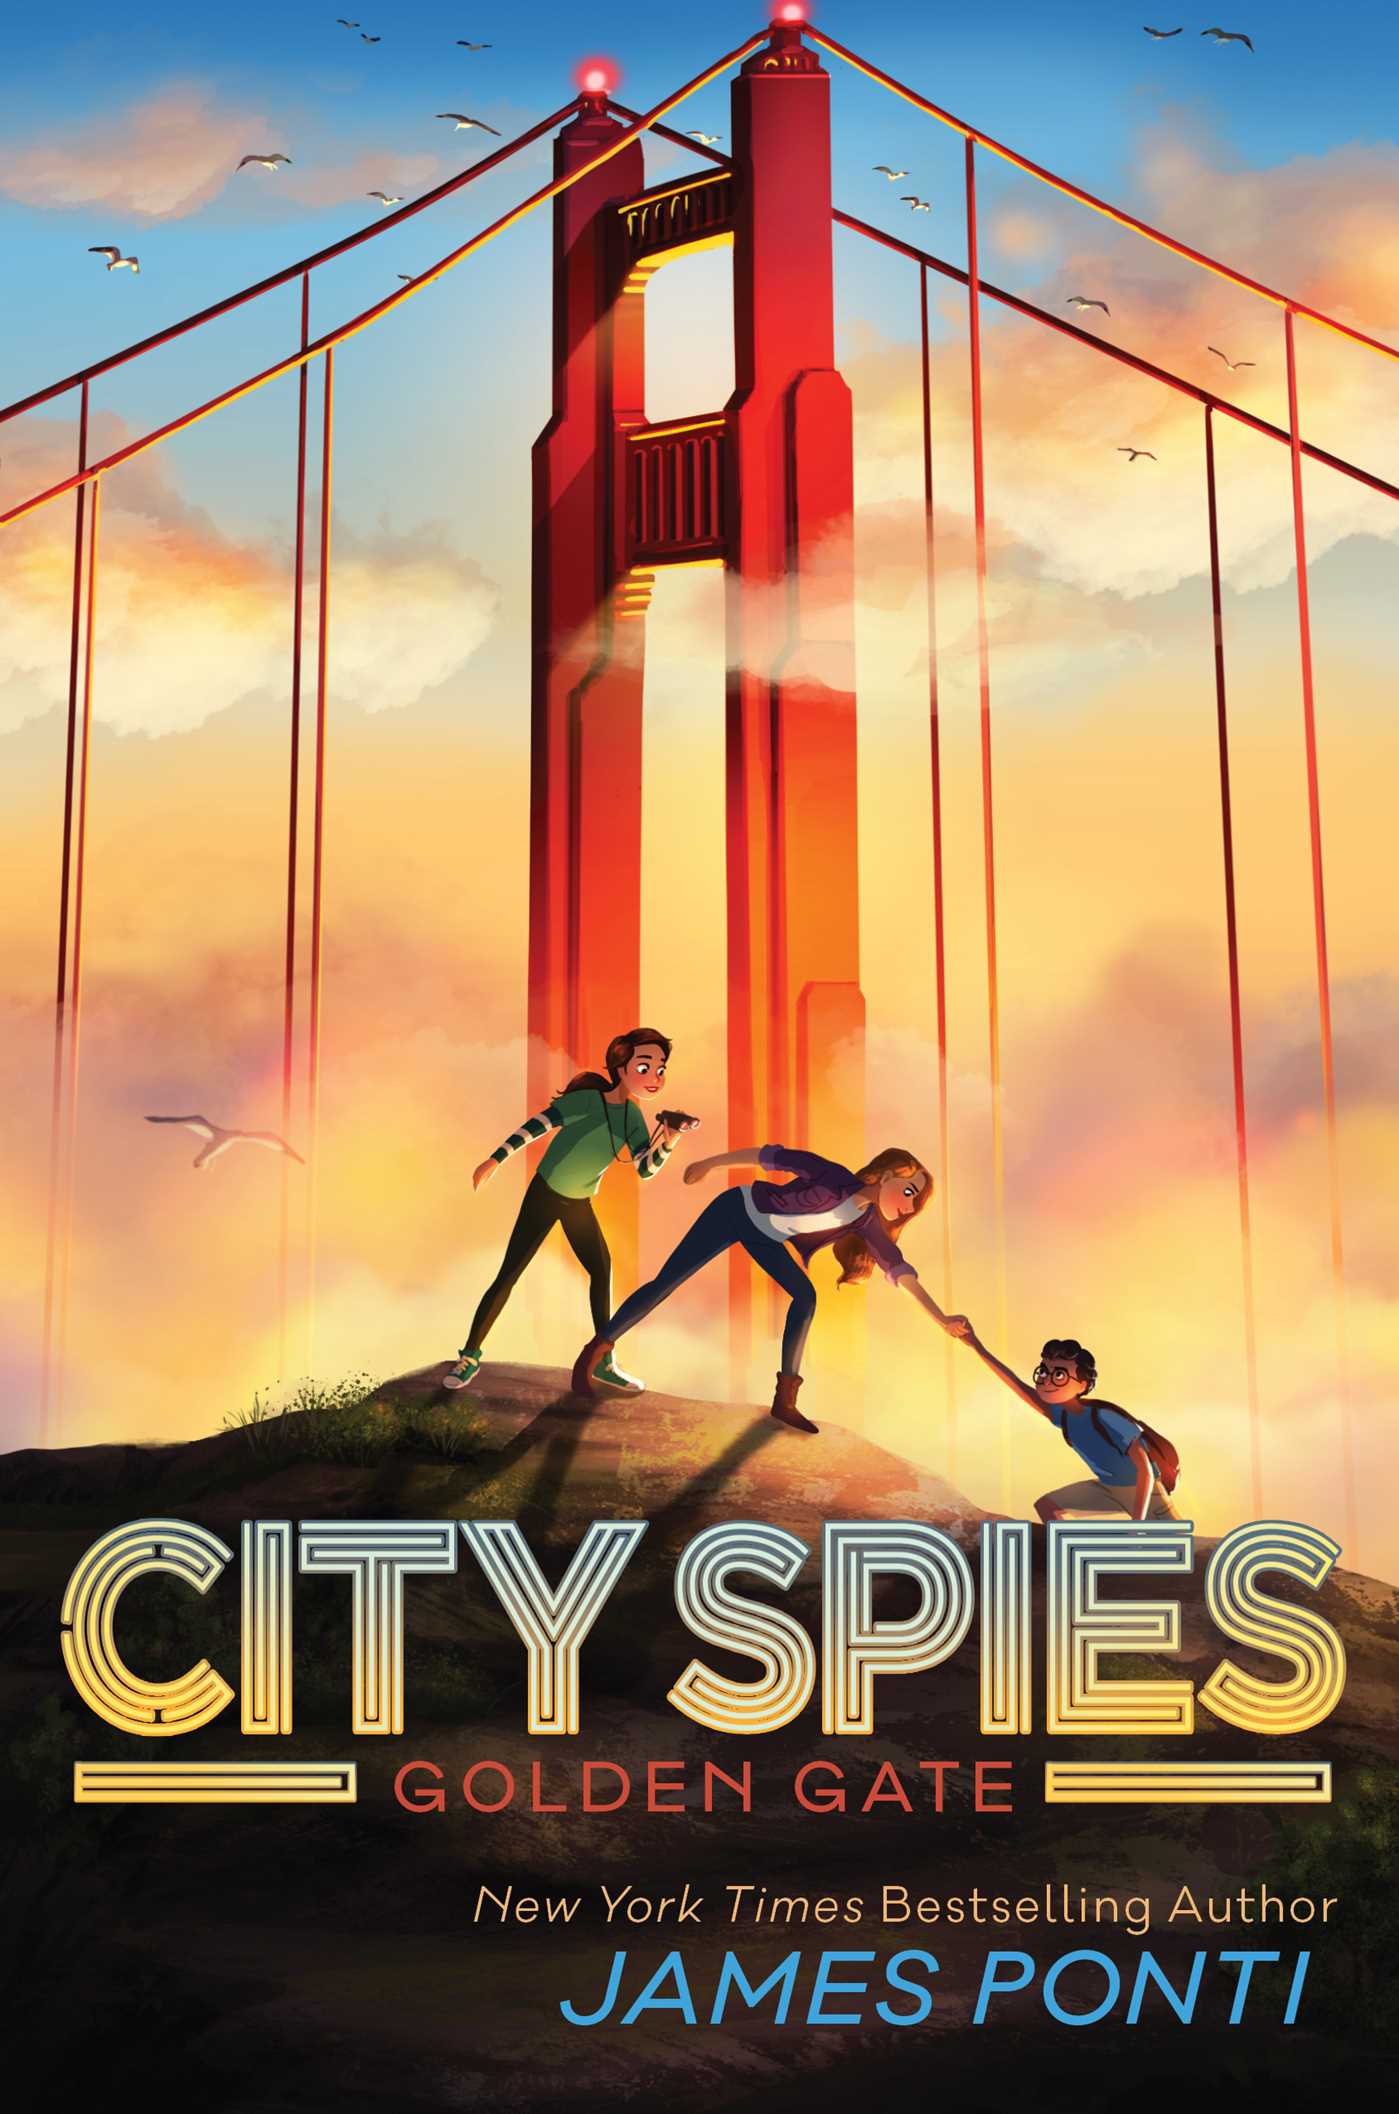 Golden Gate (City Spies, #2)